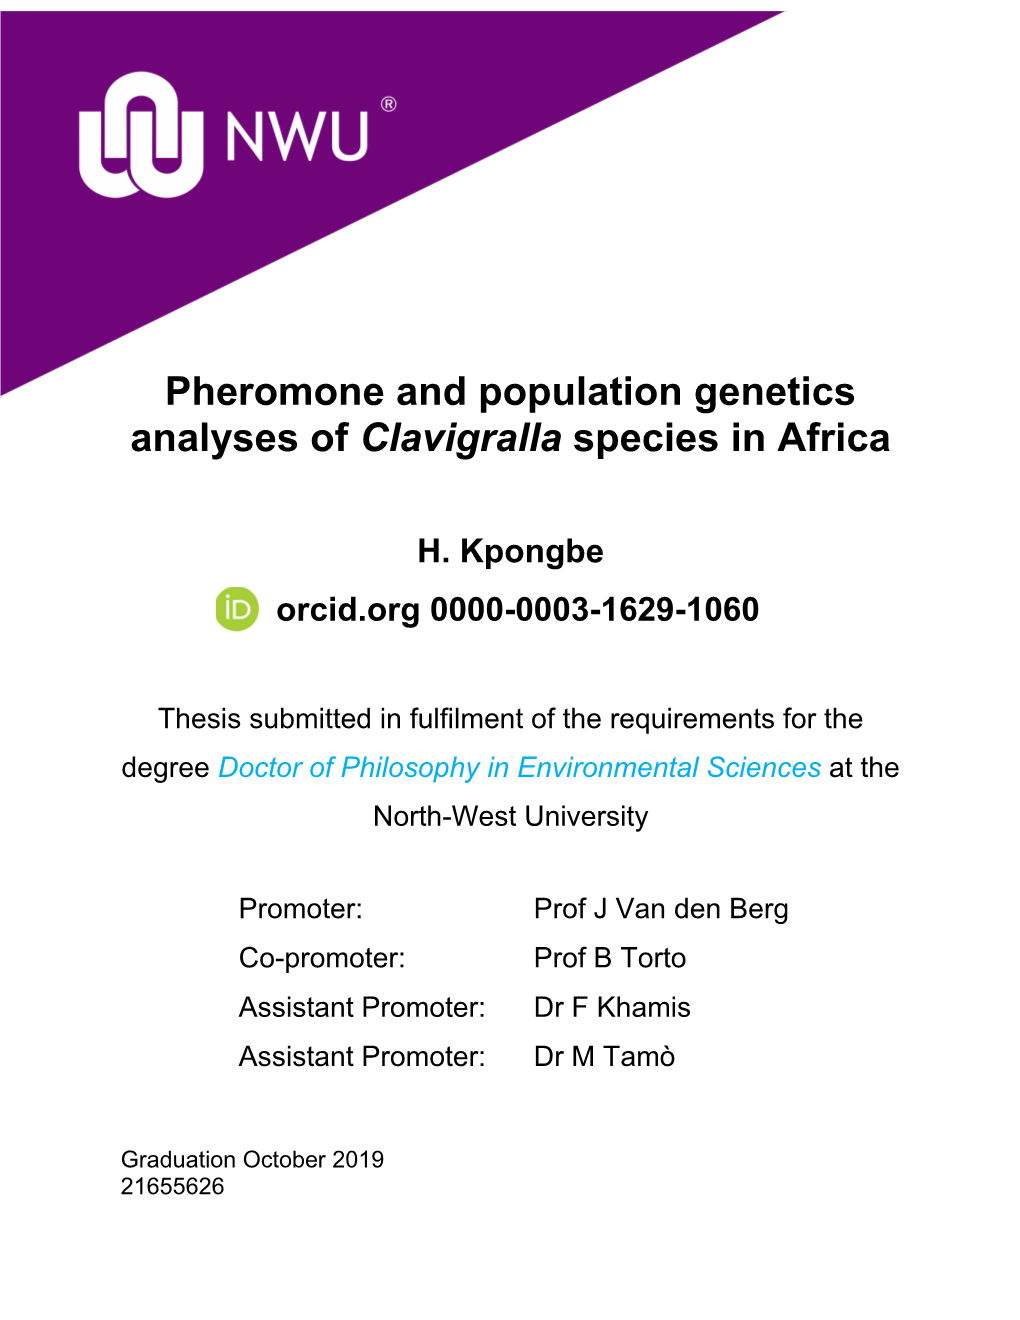 Pheromone and Population Genetics Analyses of Clavigralla Species in Africa